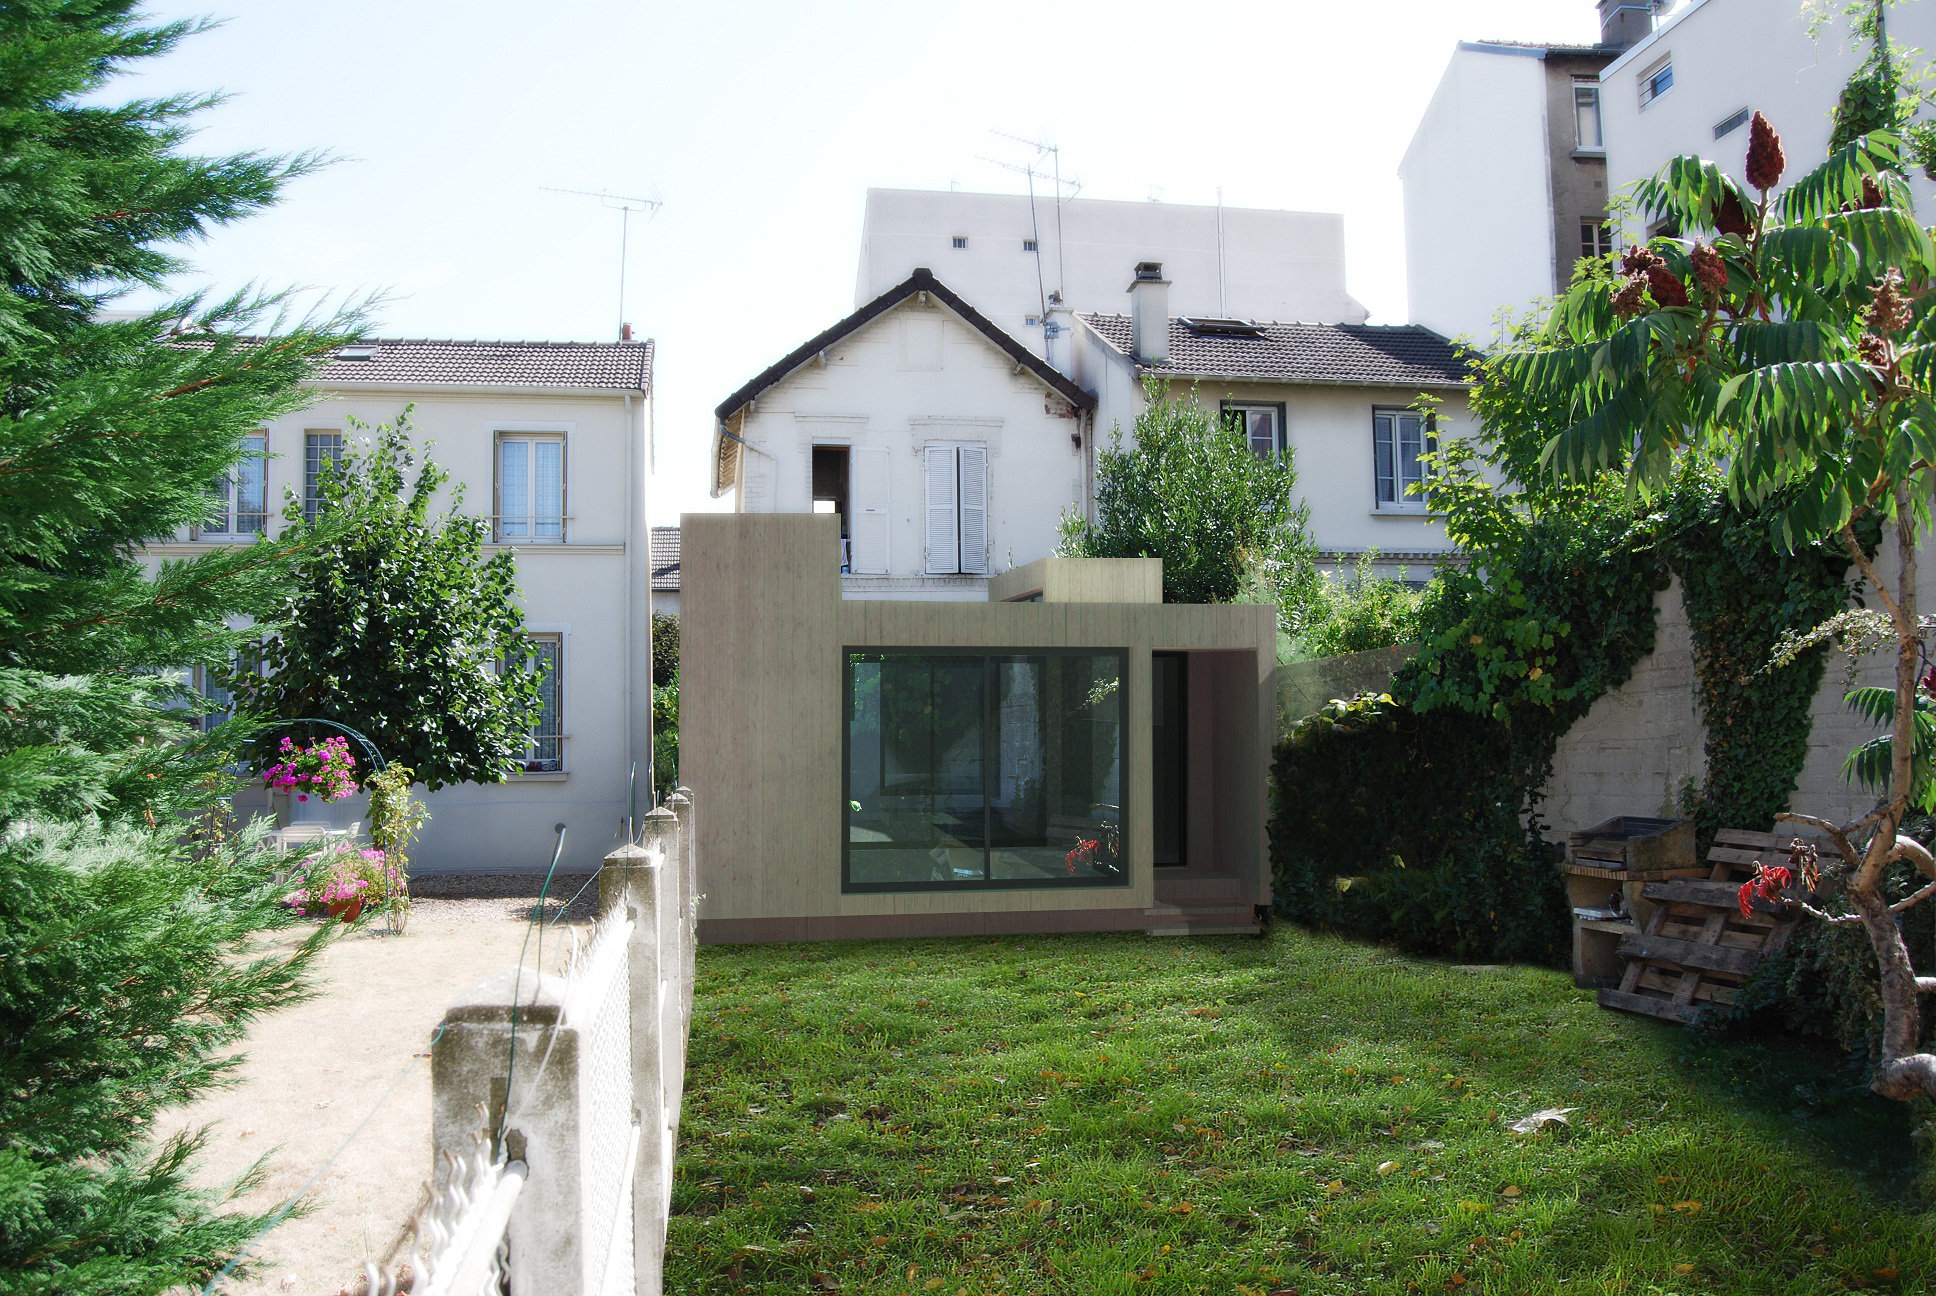 Parlange architecte - Colombes-2015